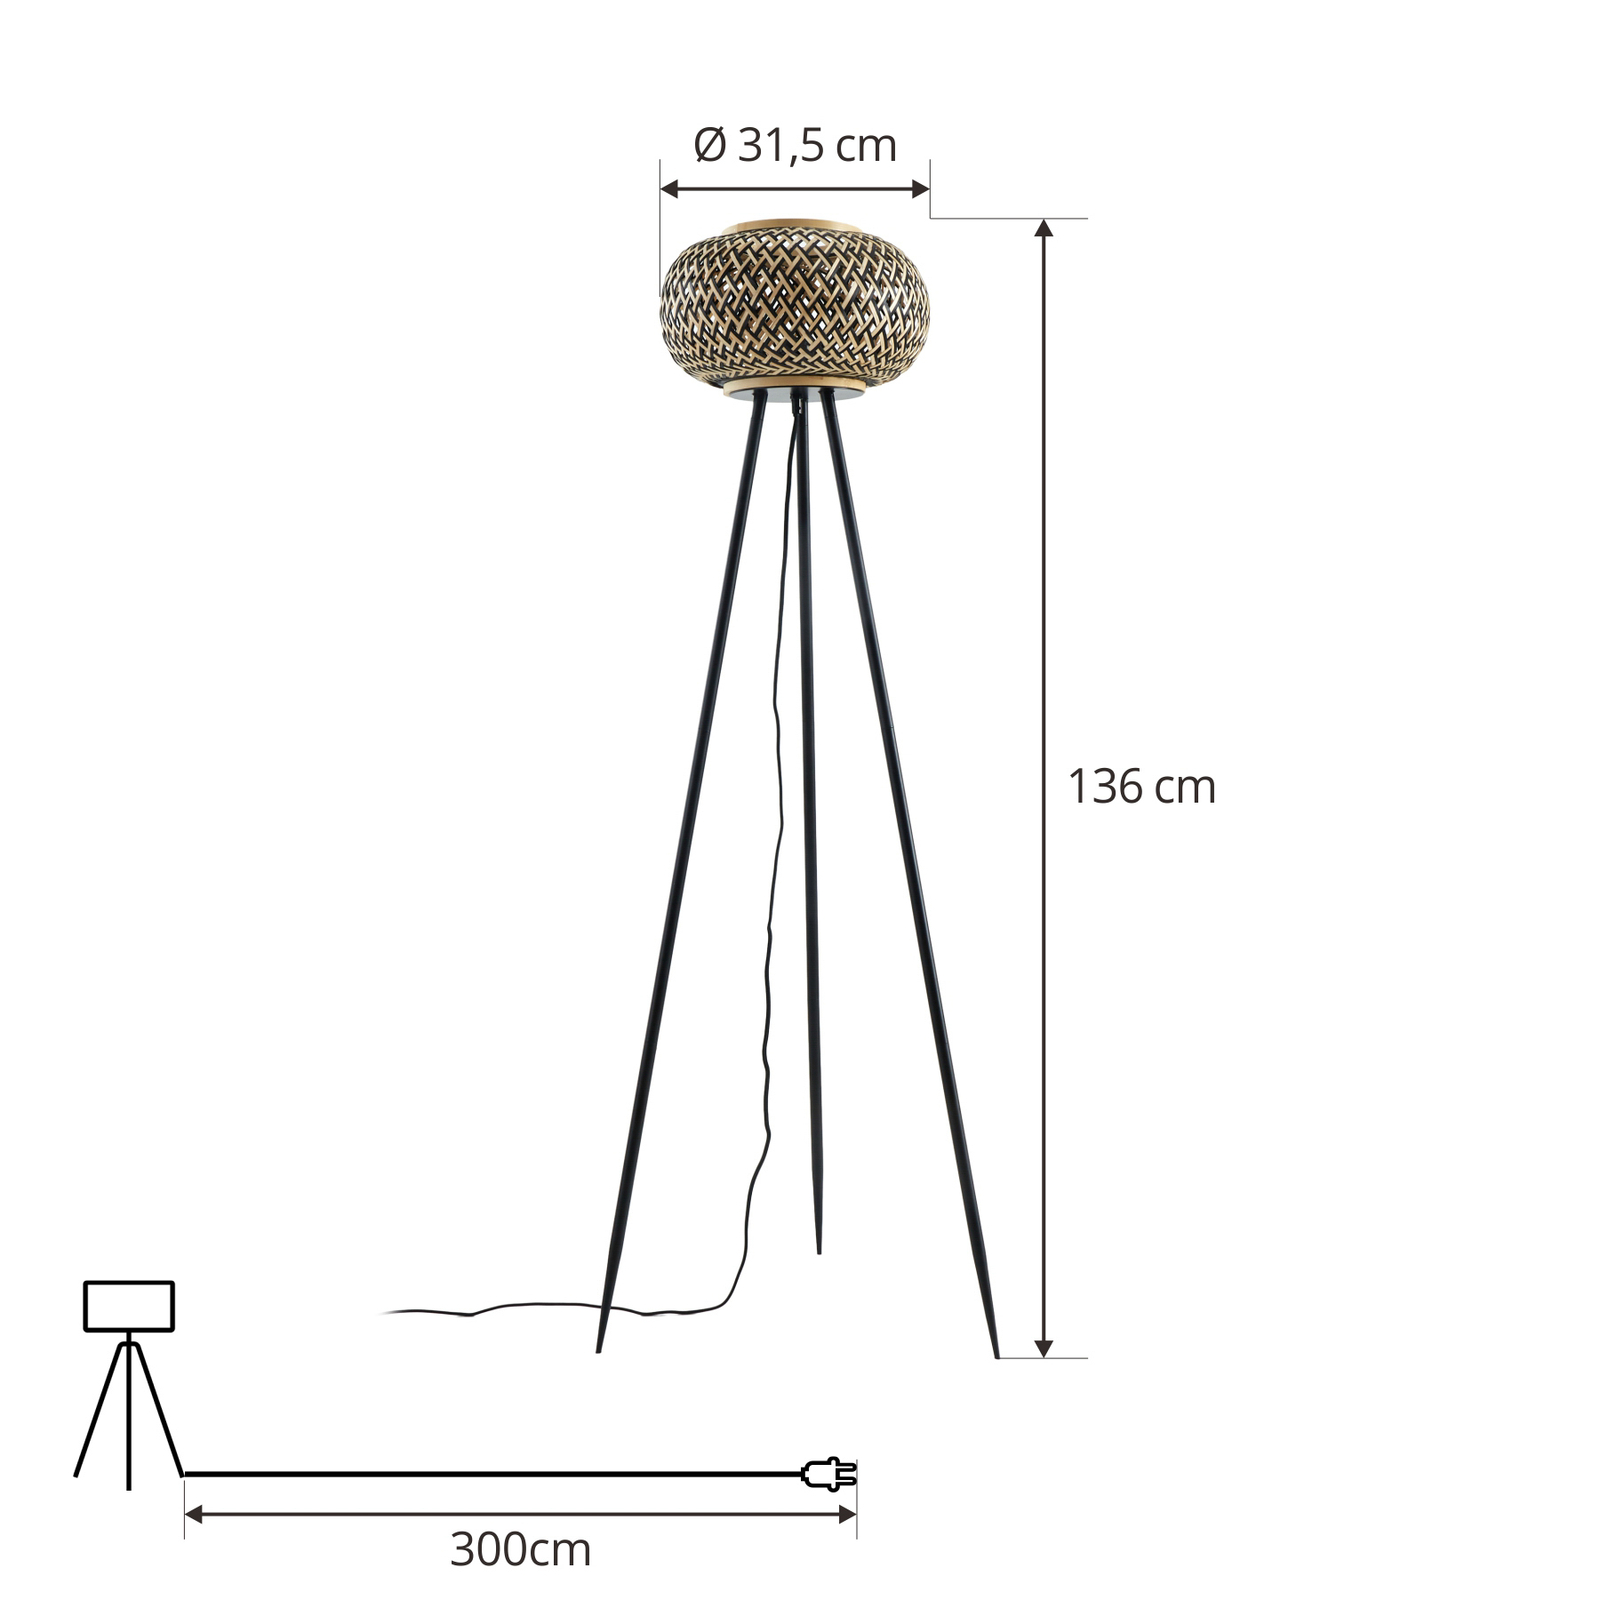 Stojacia lampa Lindby Nerys, čierna, bambus, Ø 31,5 cm, trojnožka